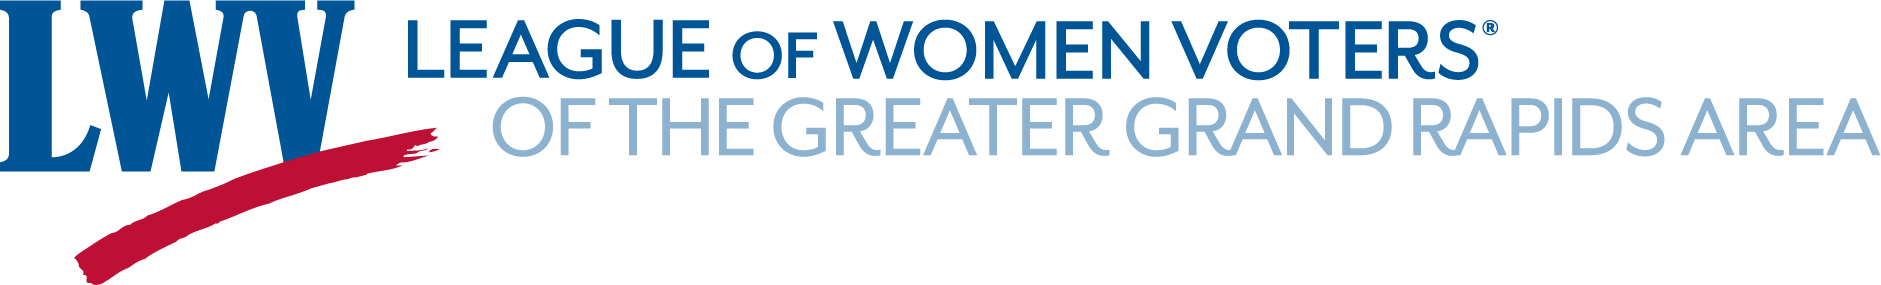 League of Women Voters Grand Rapids